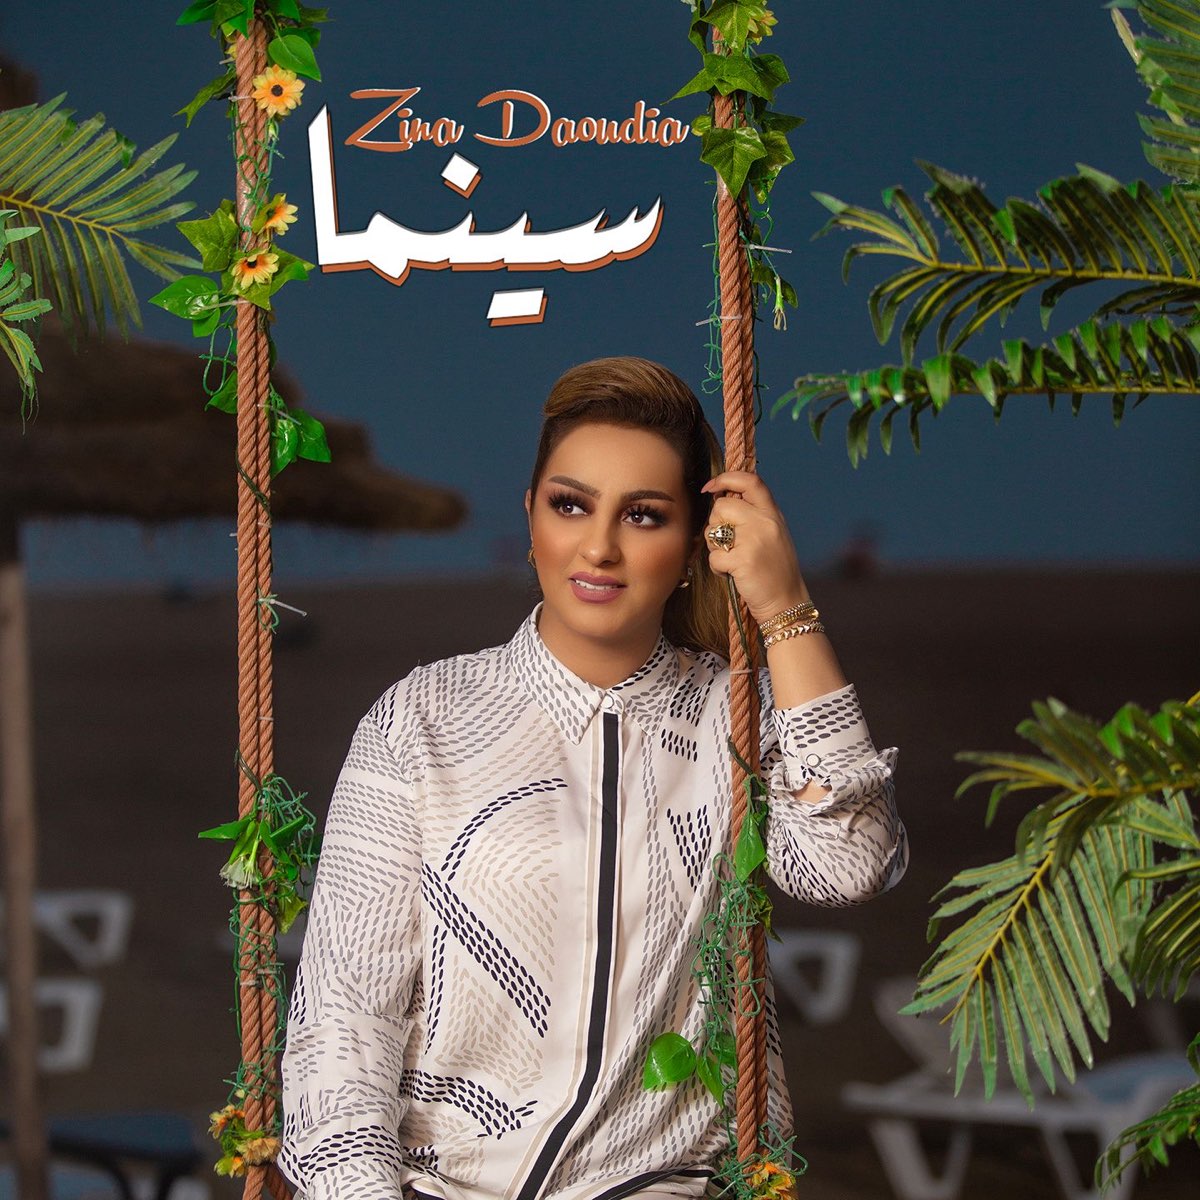 Cinema - Single - Album by Zina Daoudia - Apple Music